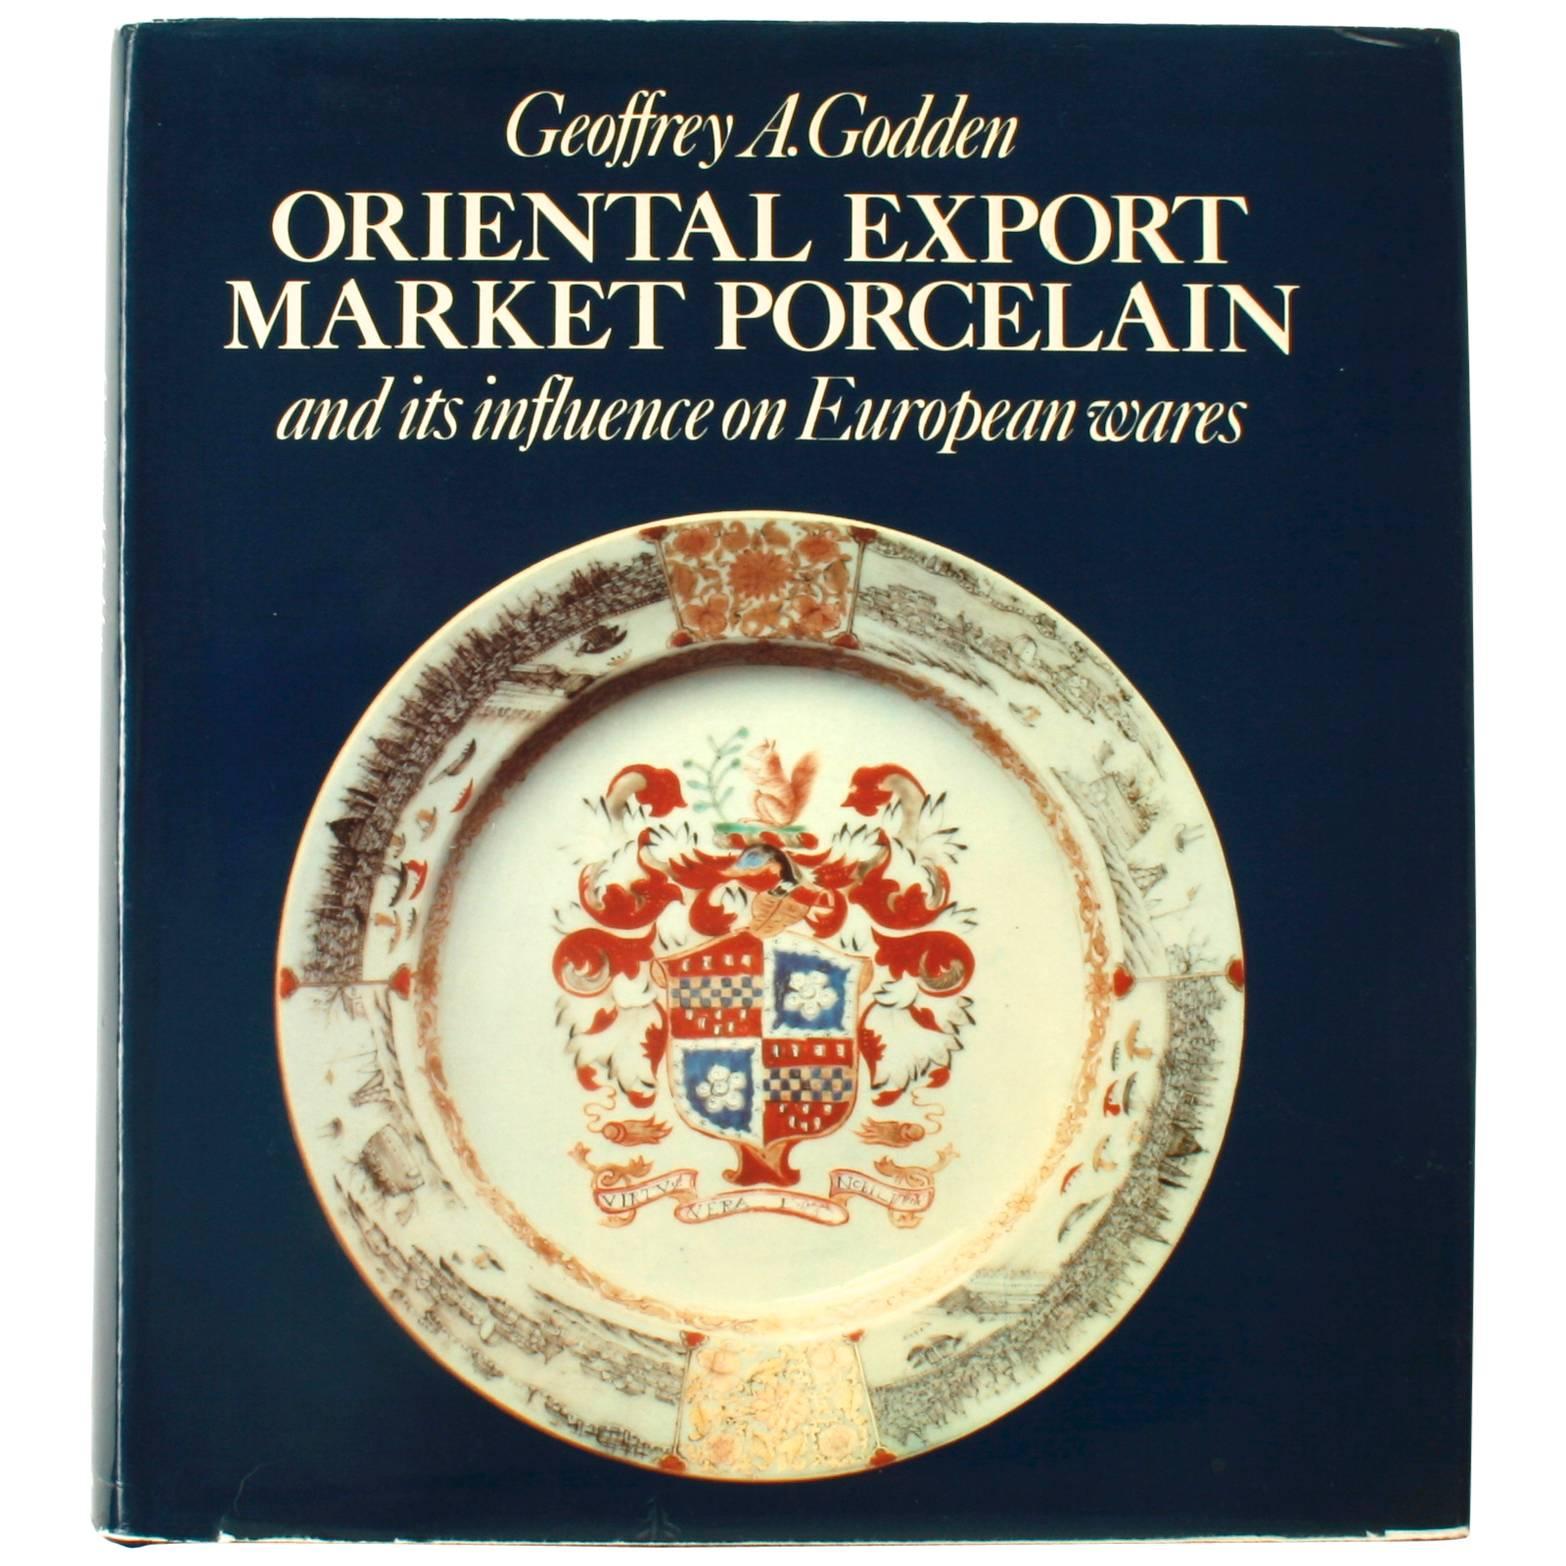 Oriental Export Market Porcelain by Geoffrey A. Godden